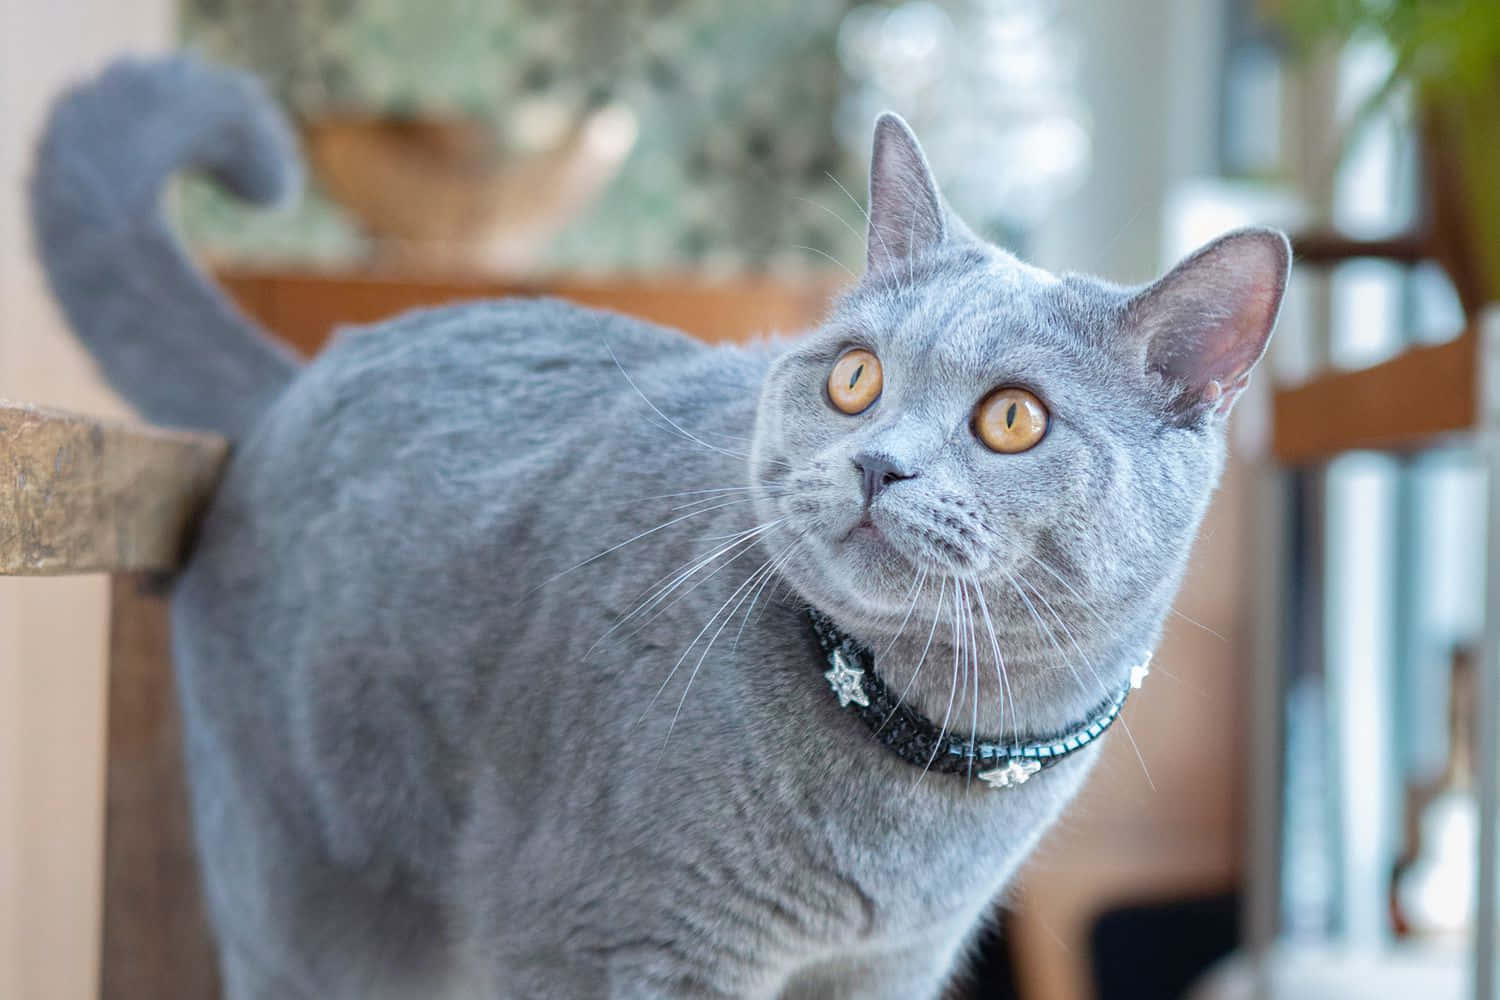 “Astonishingly Glamorous Russian Blue Cat”